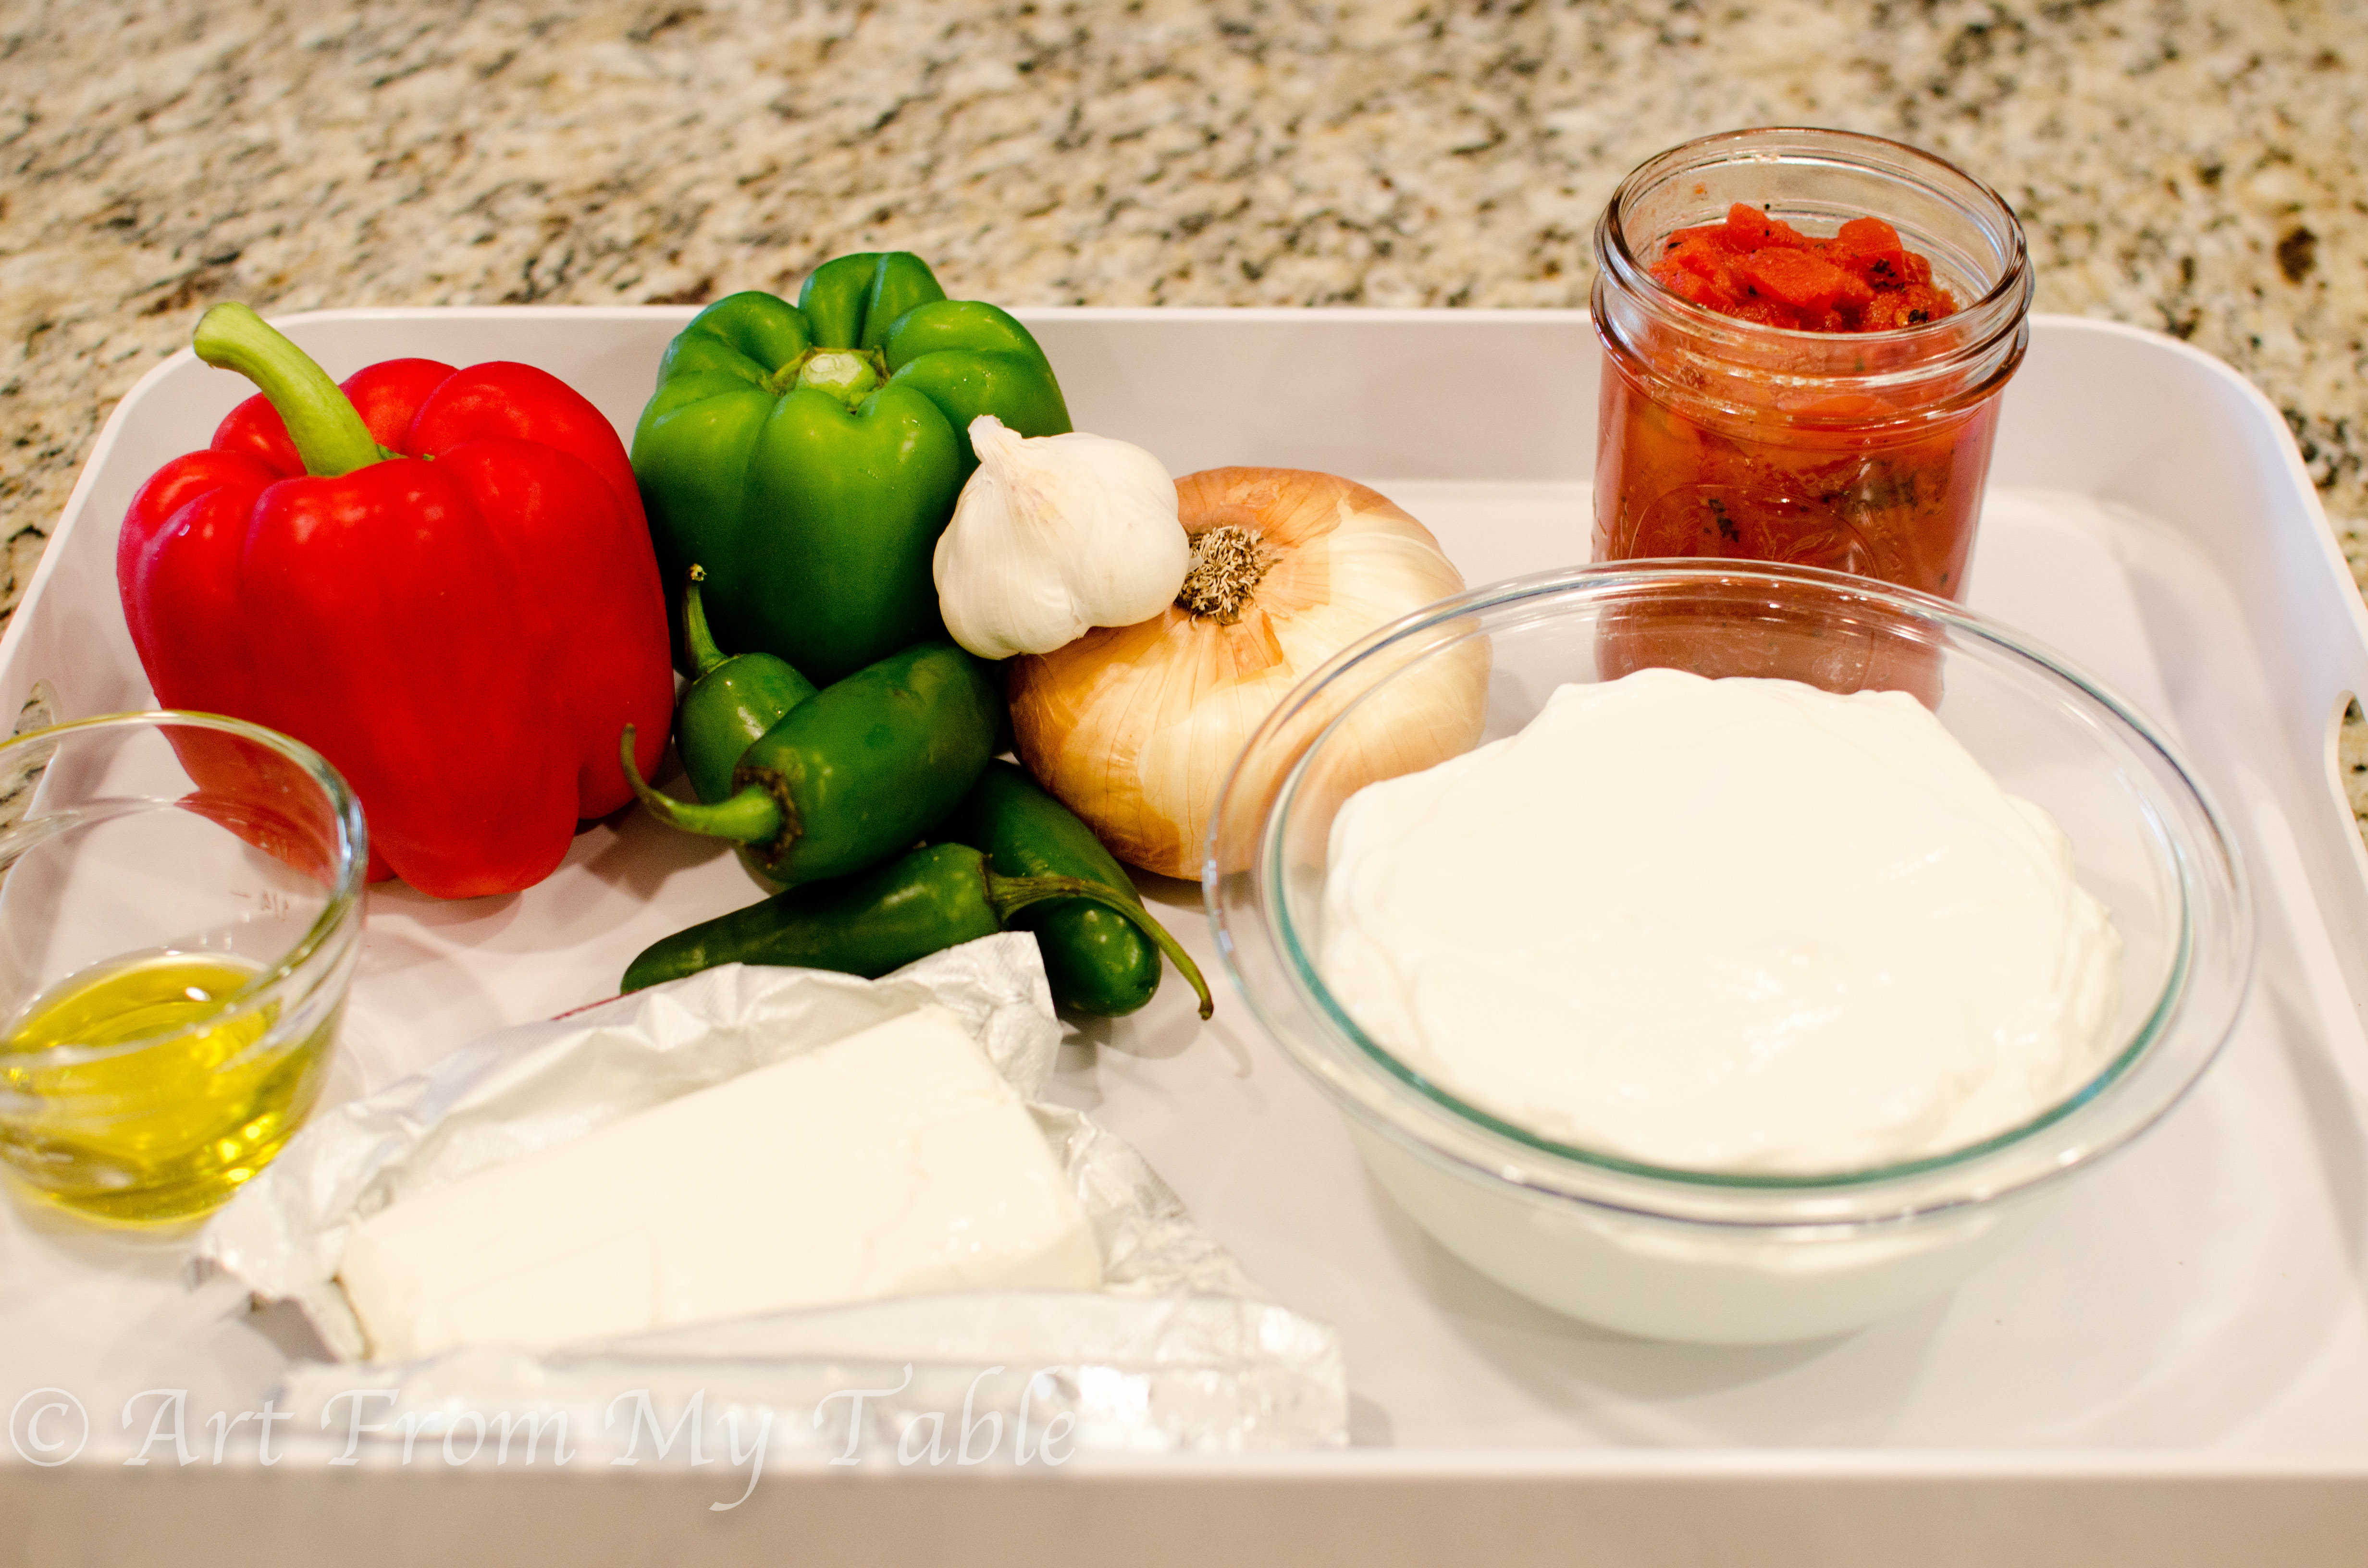 Ingredients for jalapeno yogurt dip: yogurt, vegetables, cream cheese, oil and tomatoes. 